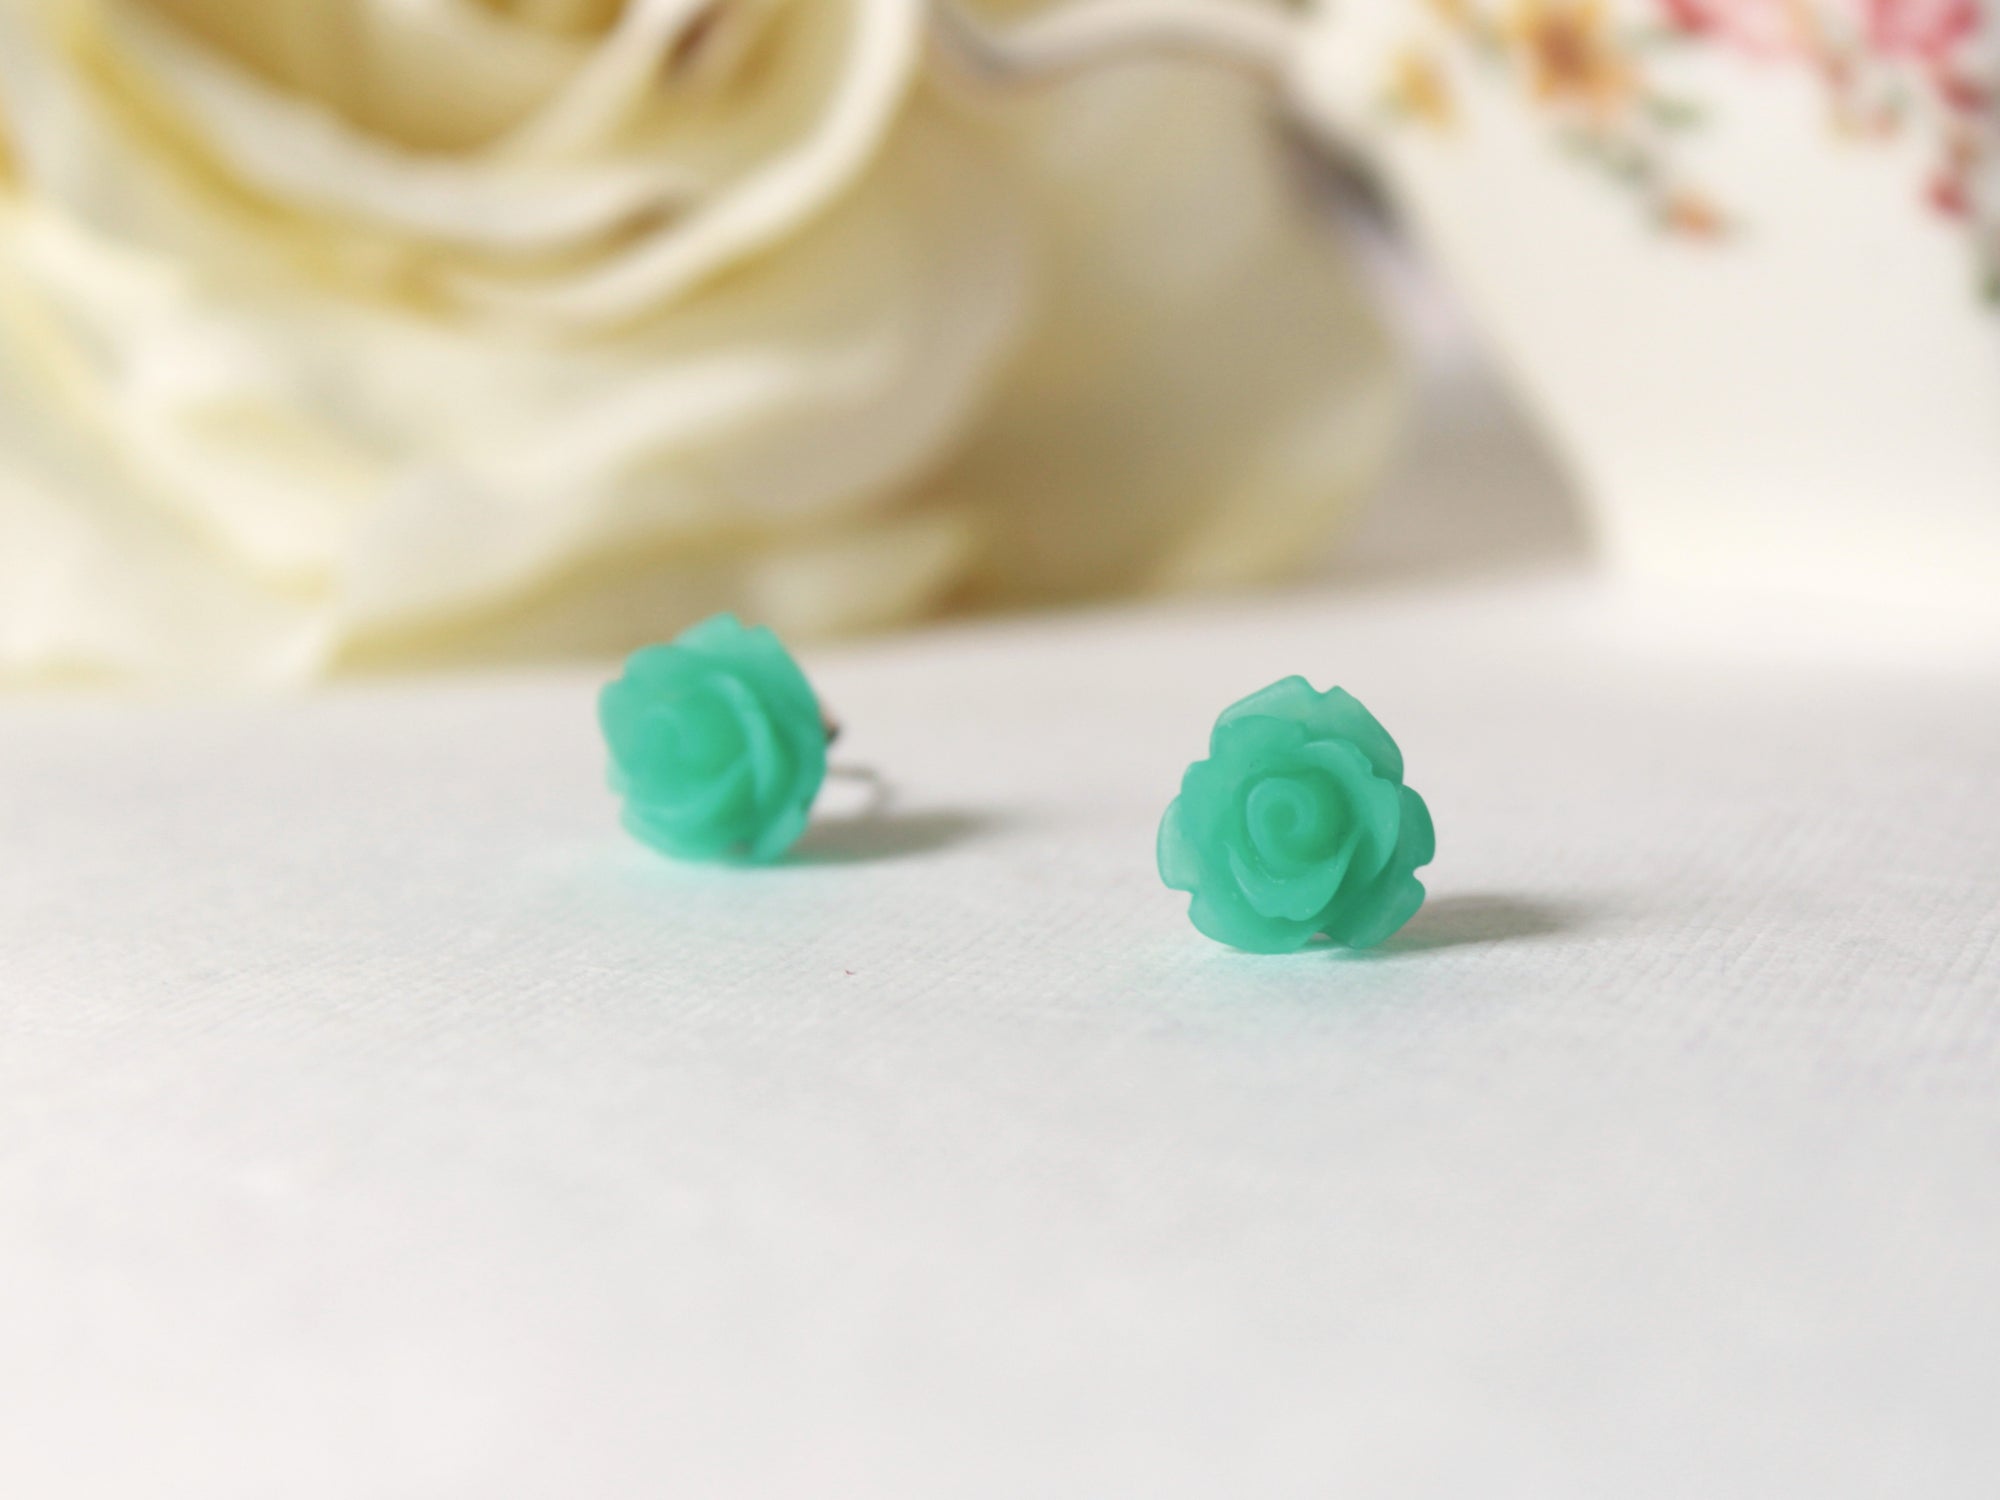 Single Bloom Rose Stud Earrings in Frosted Teal